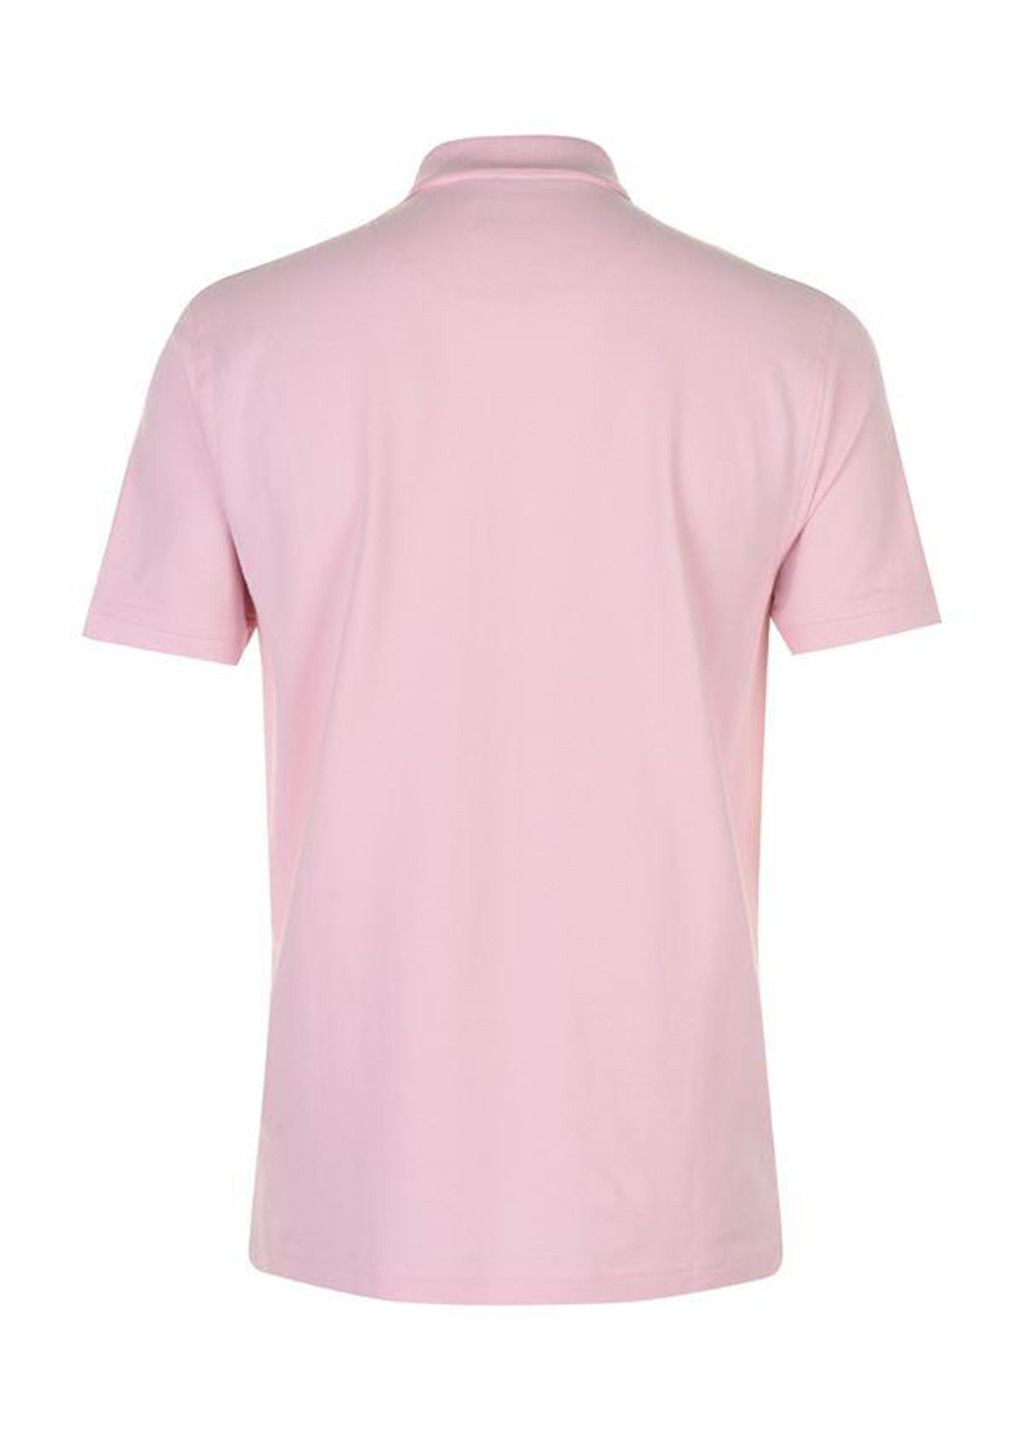 Светло-розовая футболка-поло для мужчин Pierre Cardin с логотипом